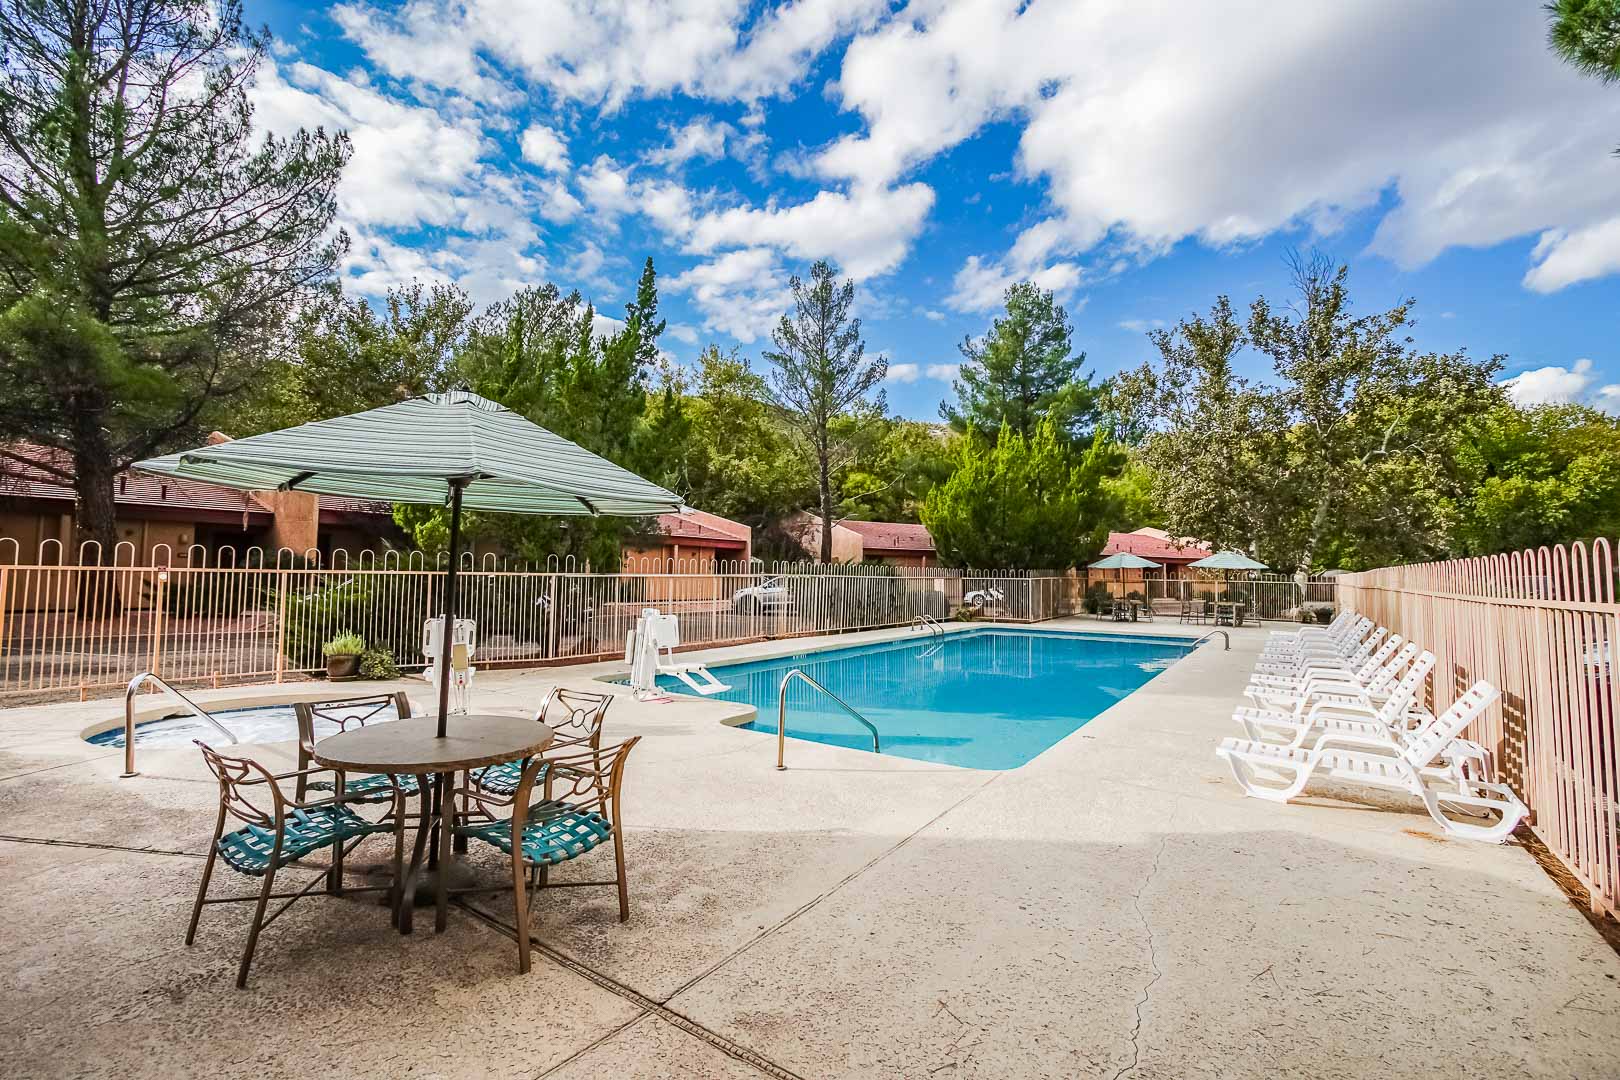 A crisp outdoor swimming pool at VRI's Villas at Poco Diablo in Sedona, Arizona.